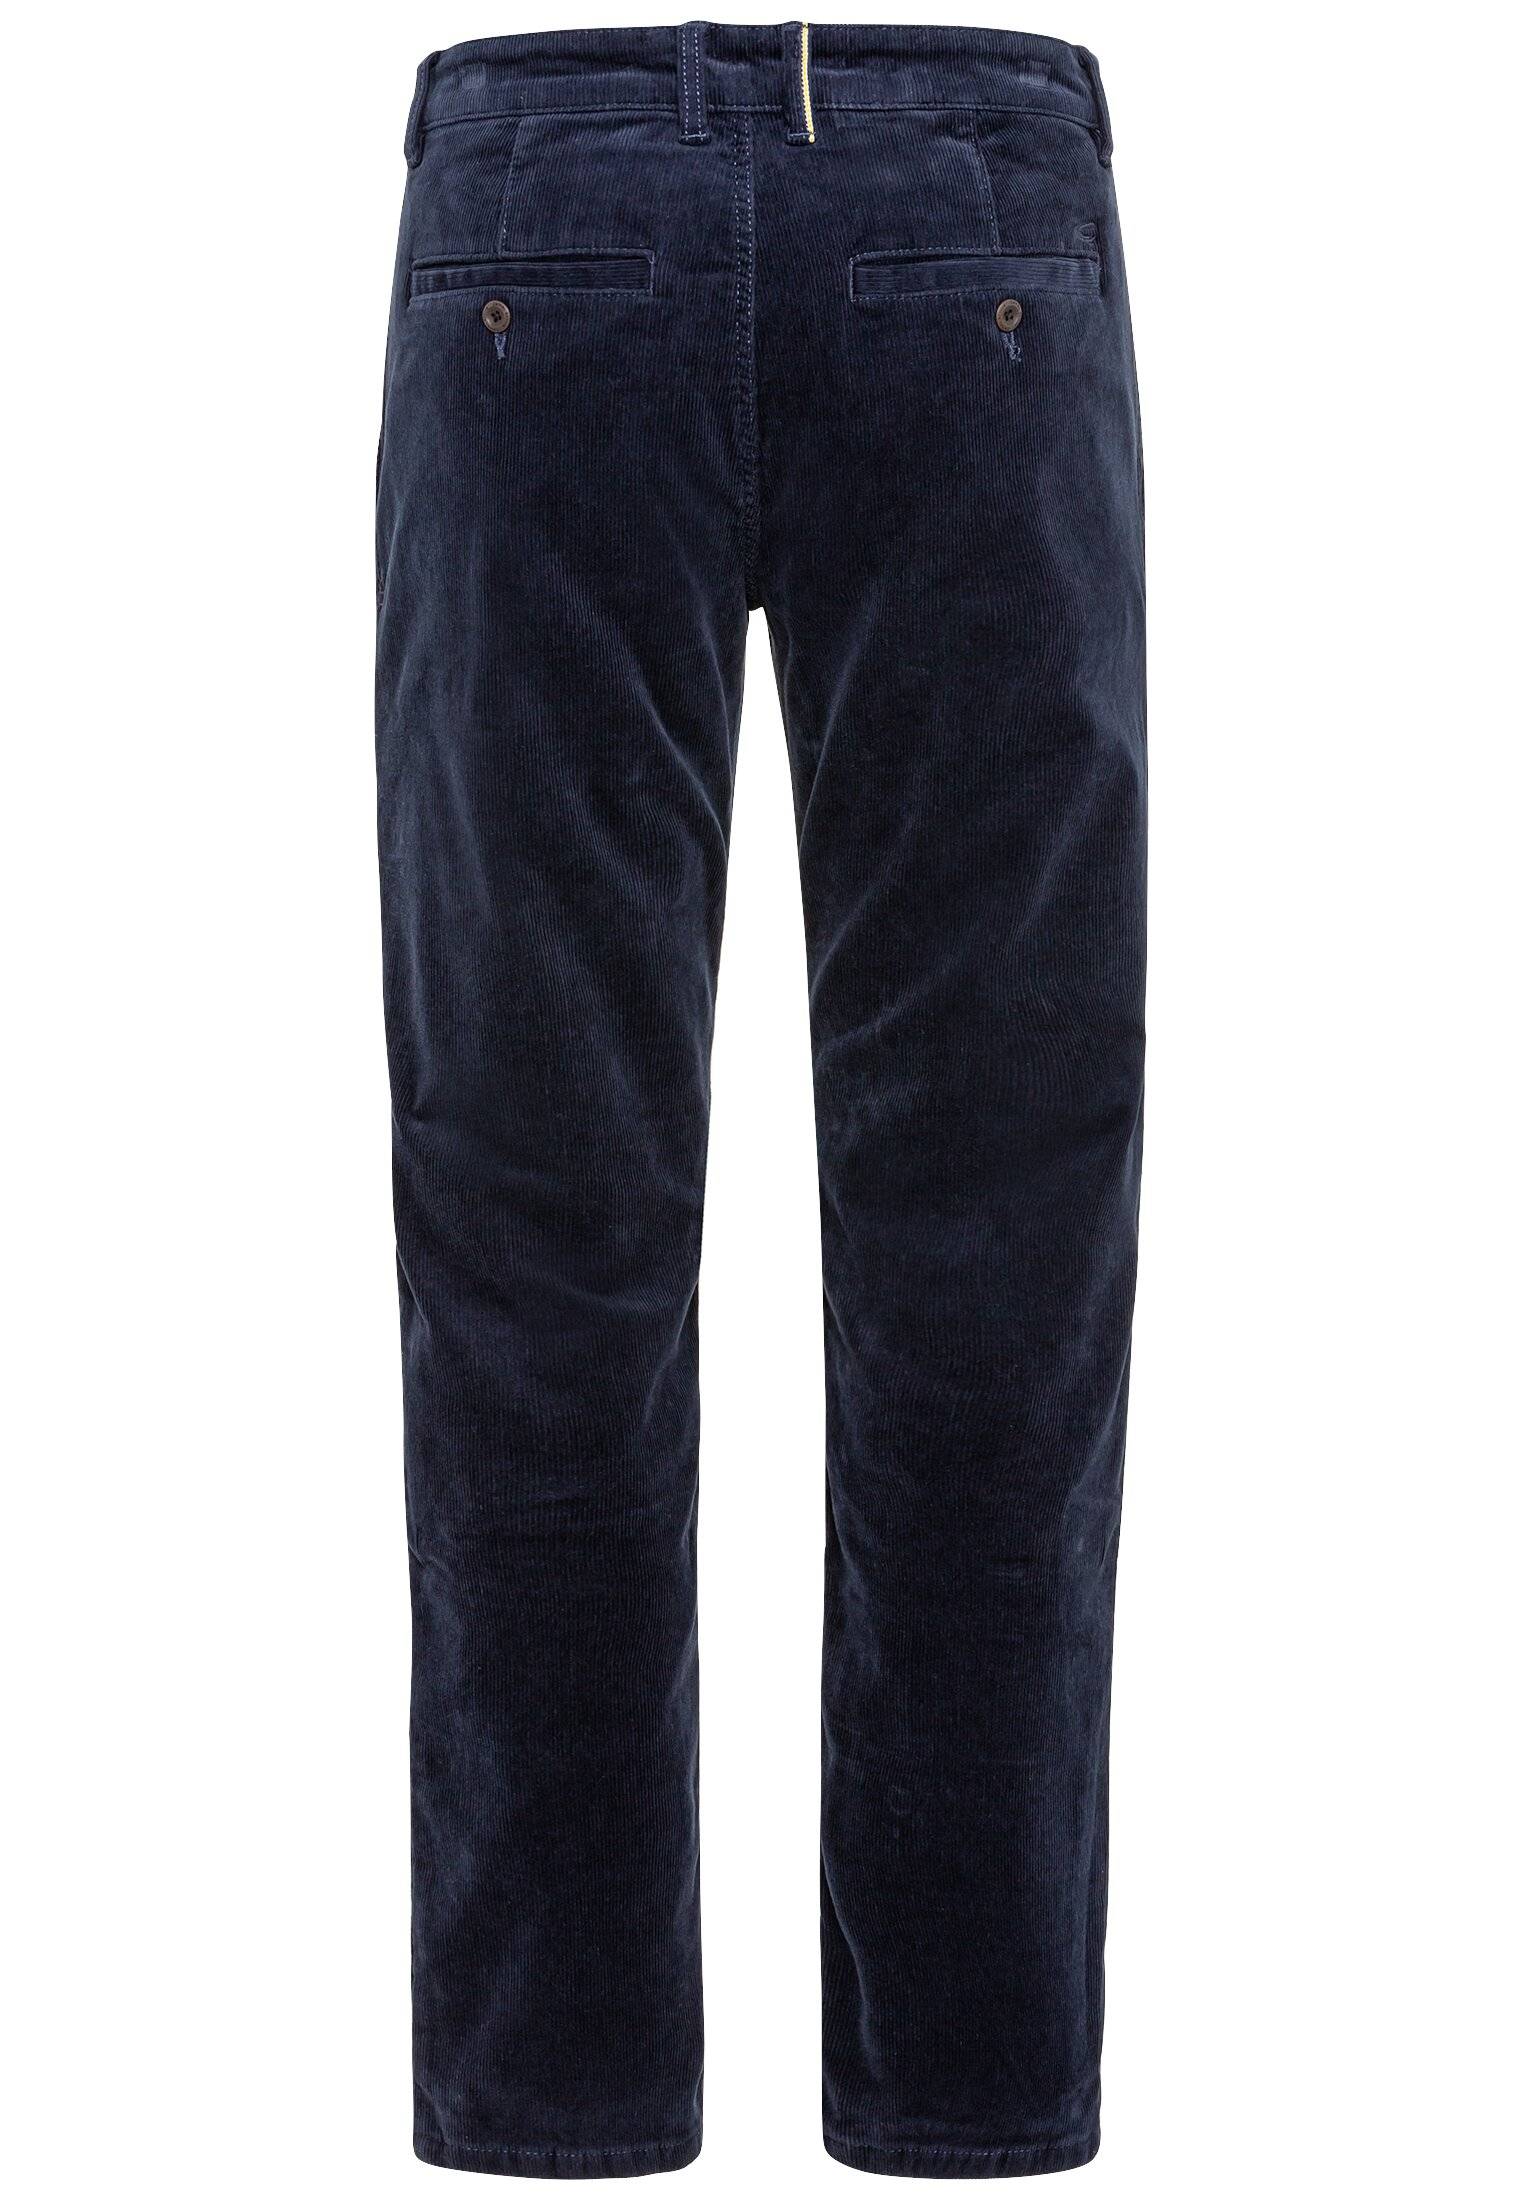 Мужские брюки Camel Active, синие, цвет синий, размер 38 - фото 2